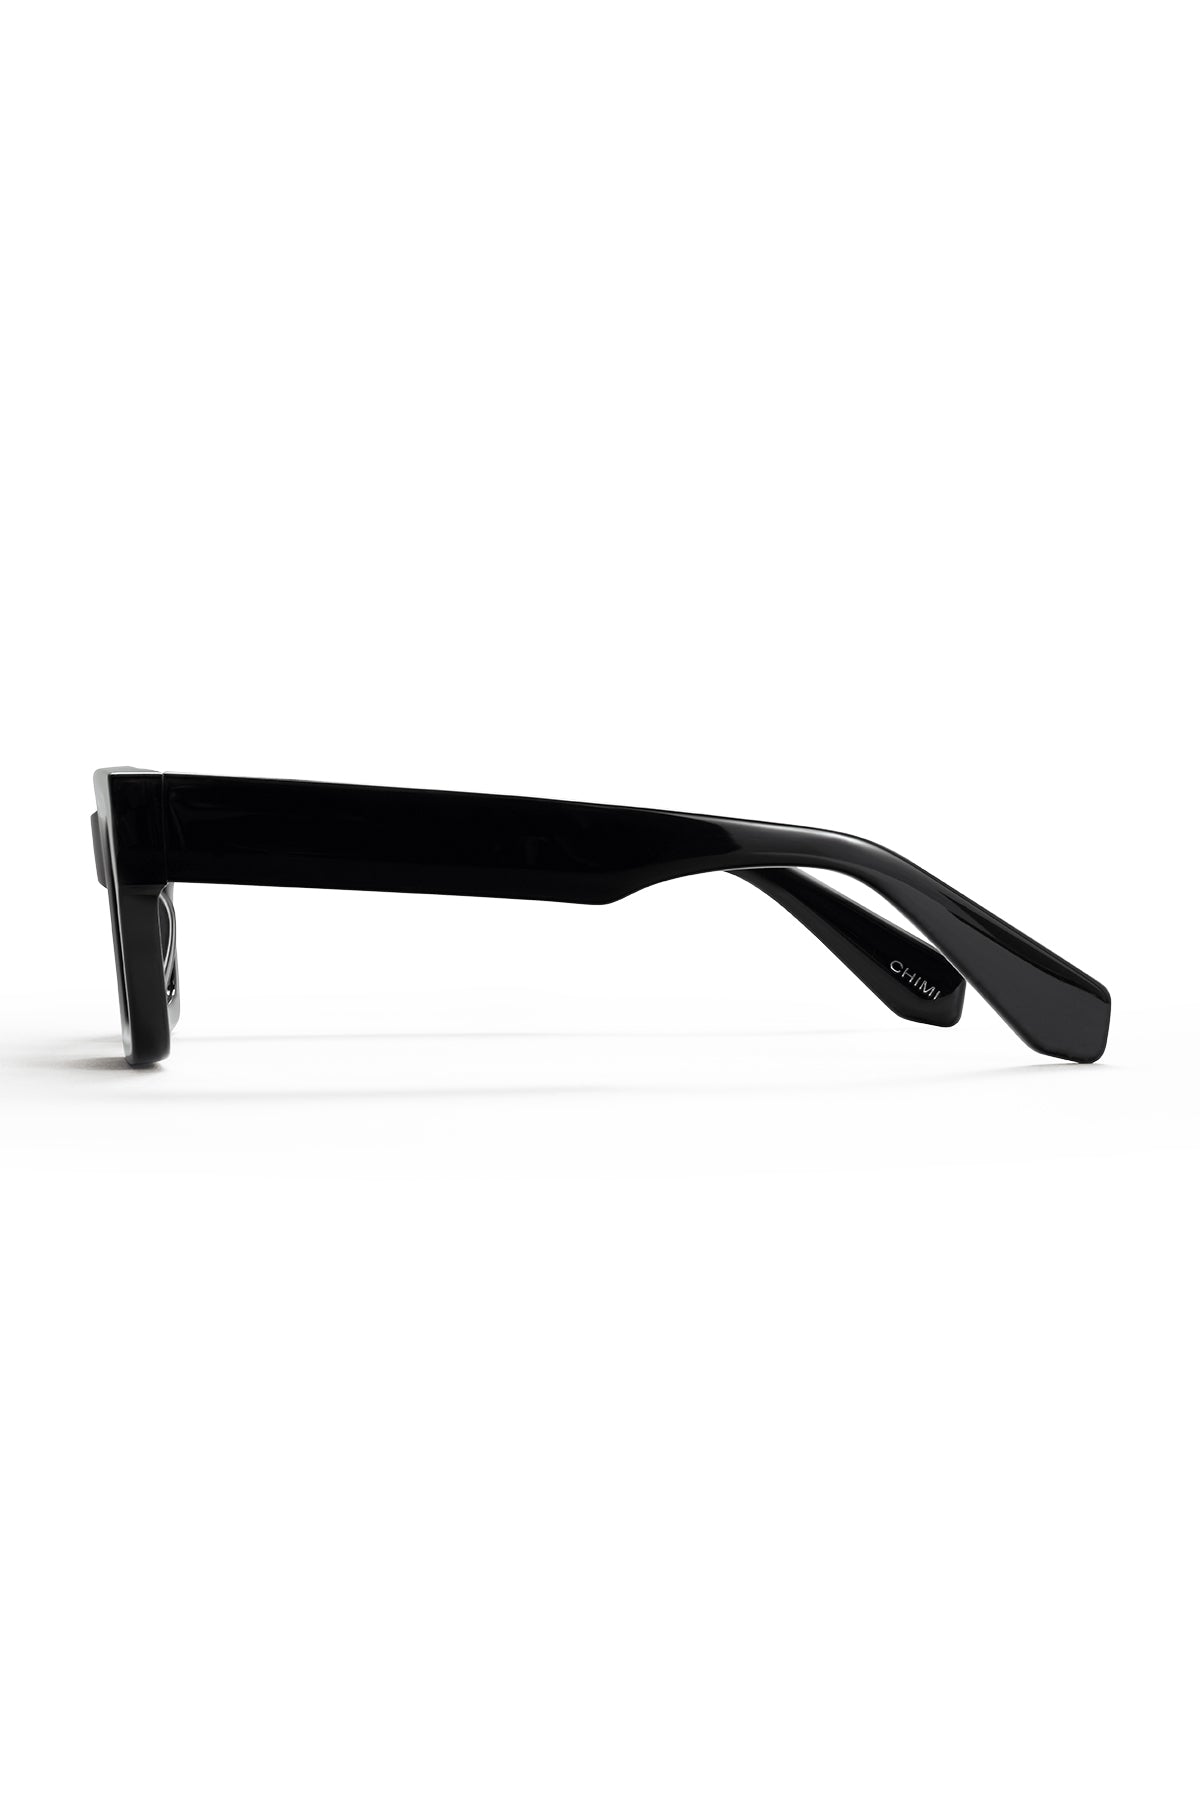 Chimi 05 Sunglasses Black Side-22133139308737